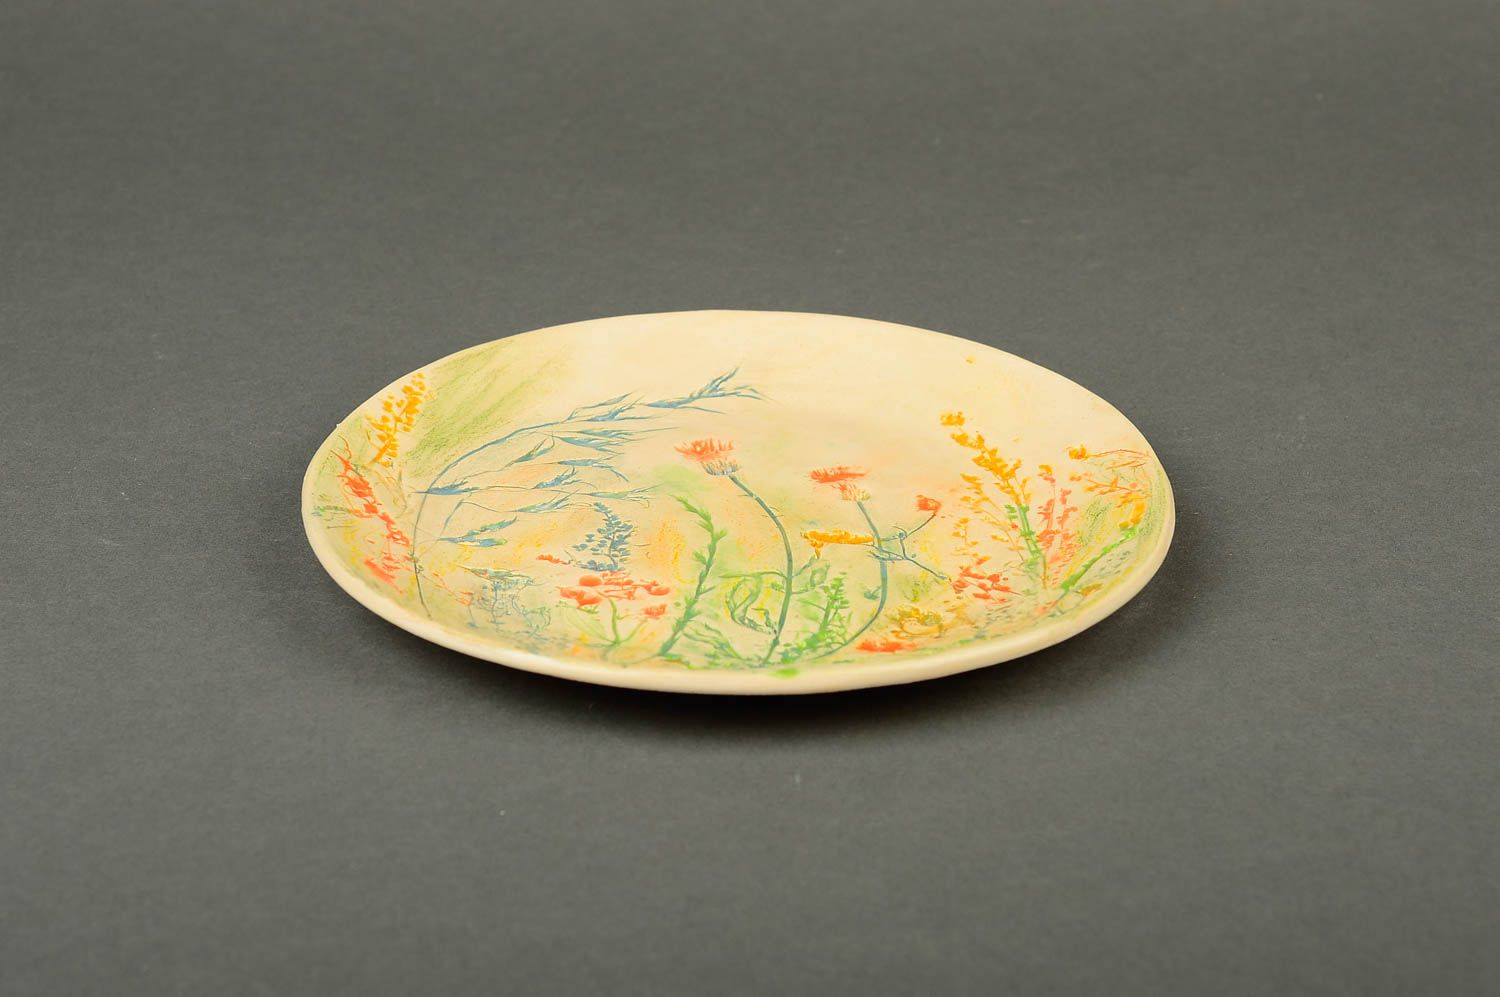 Unusual handmade ceramic plate stylish kitchenware ideas table setting photo 3